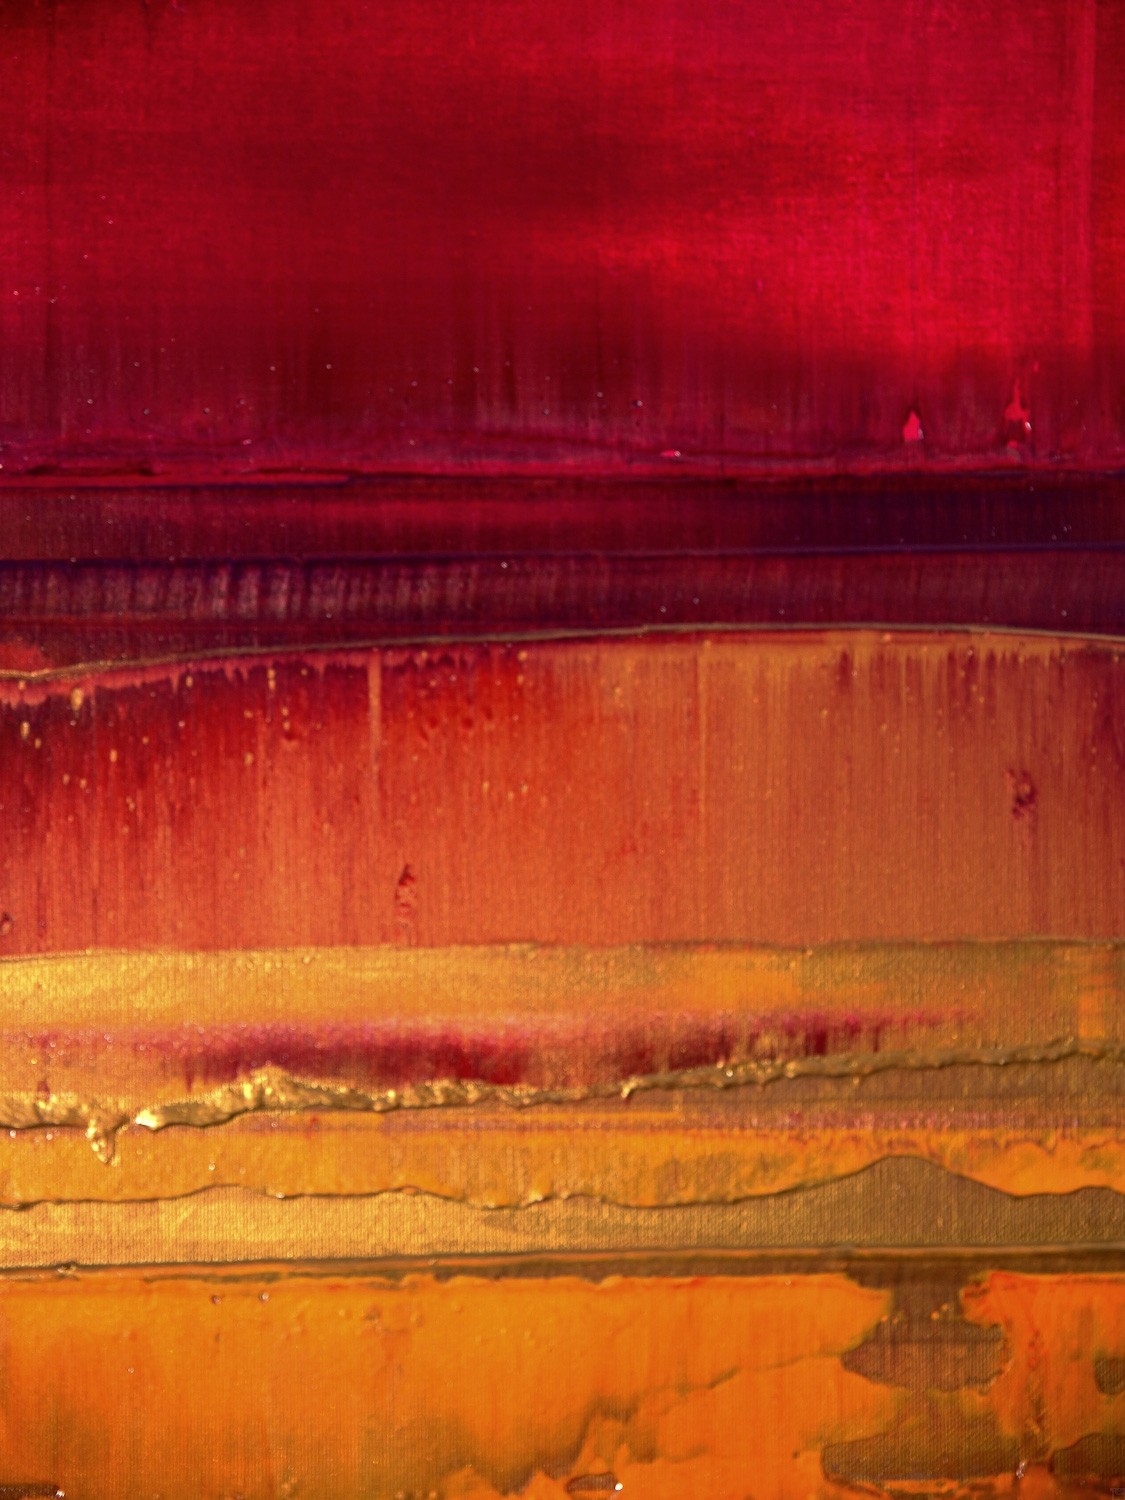 Prisma 15 – Sonnenuntergang Rubin | Malerei von Lali Torma | Acryl auf Leinwand, abstrakt, detail05